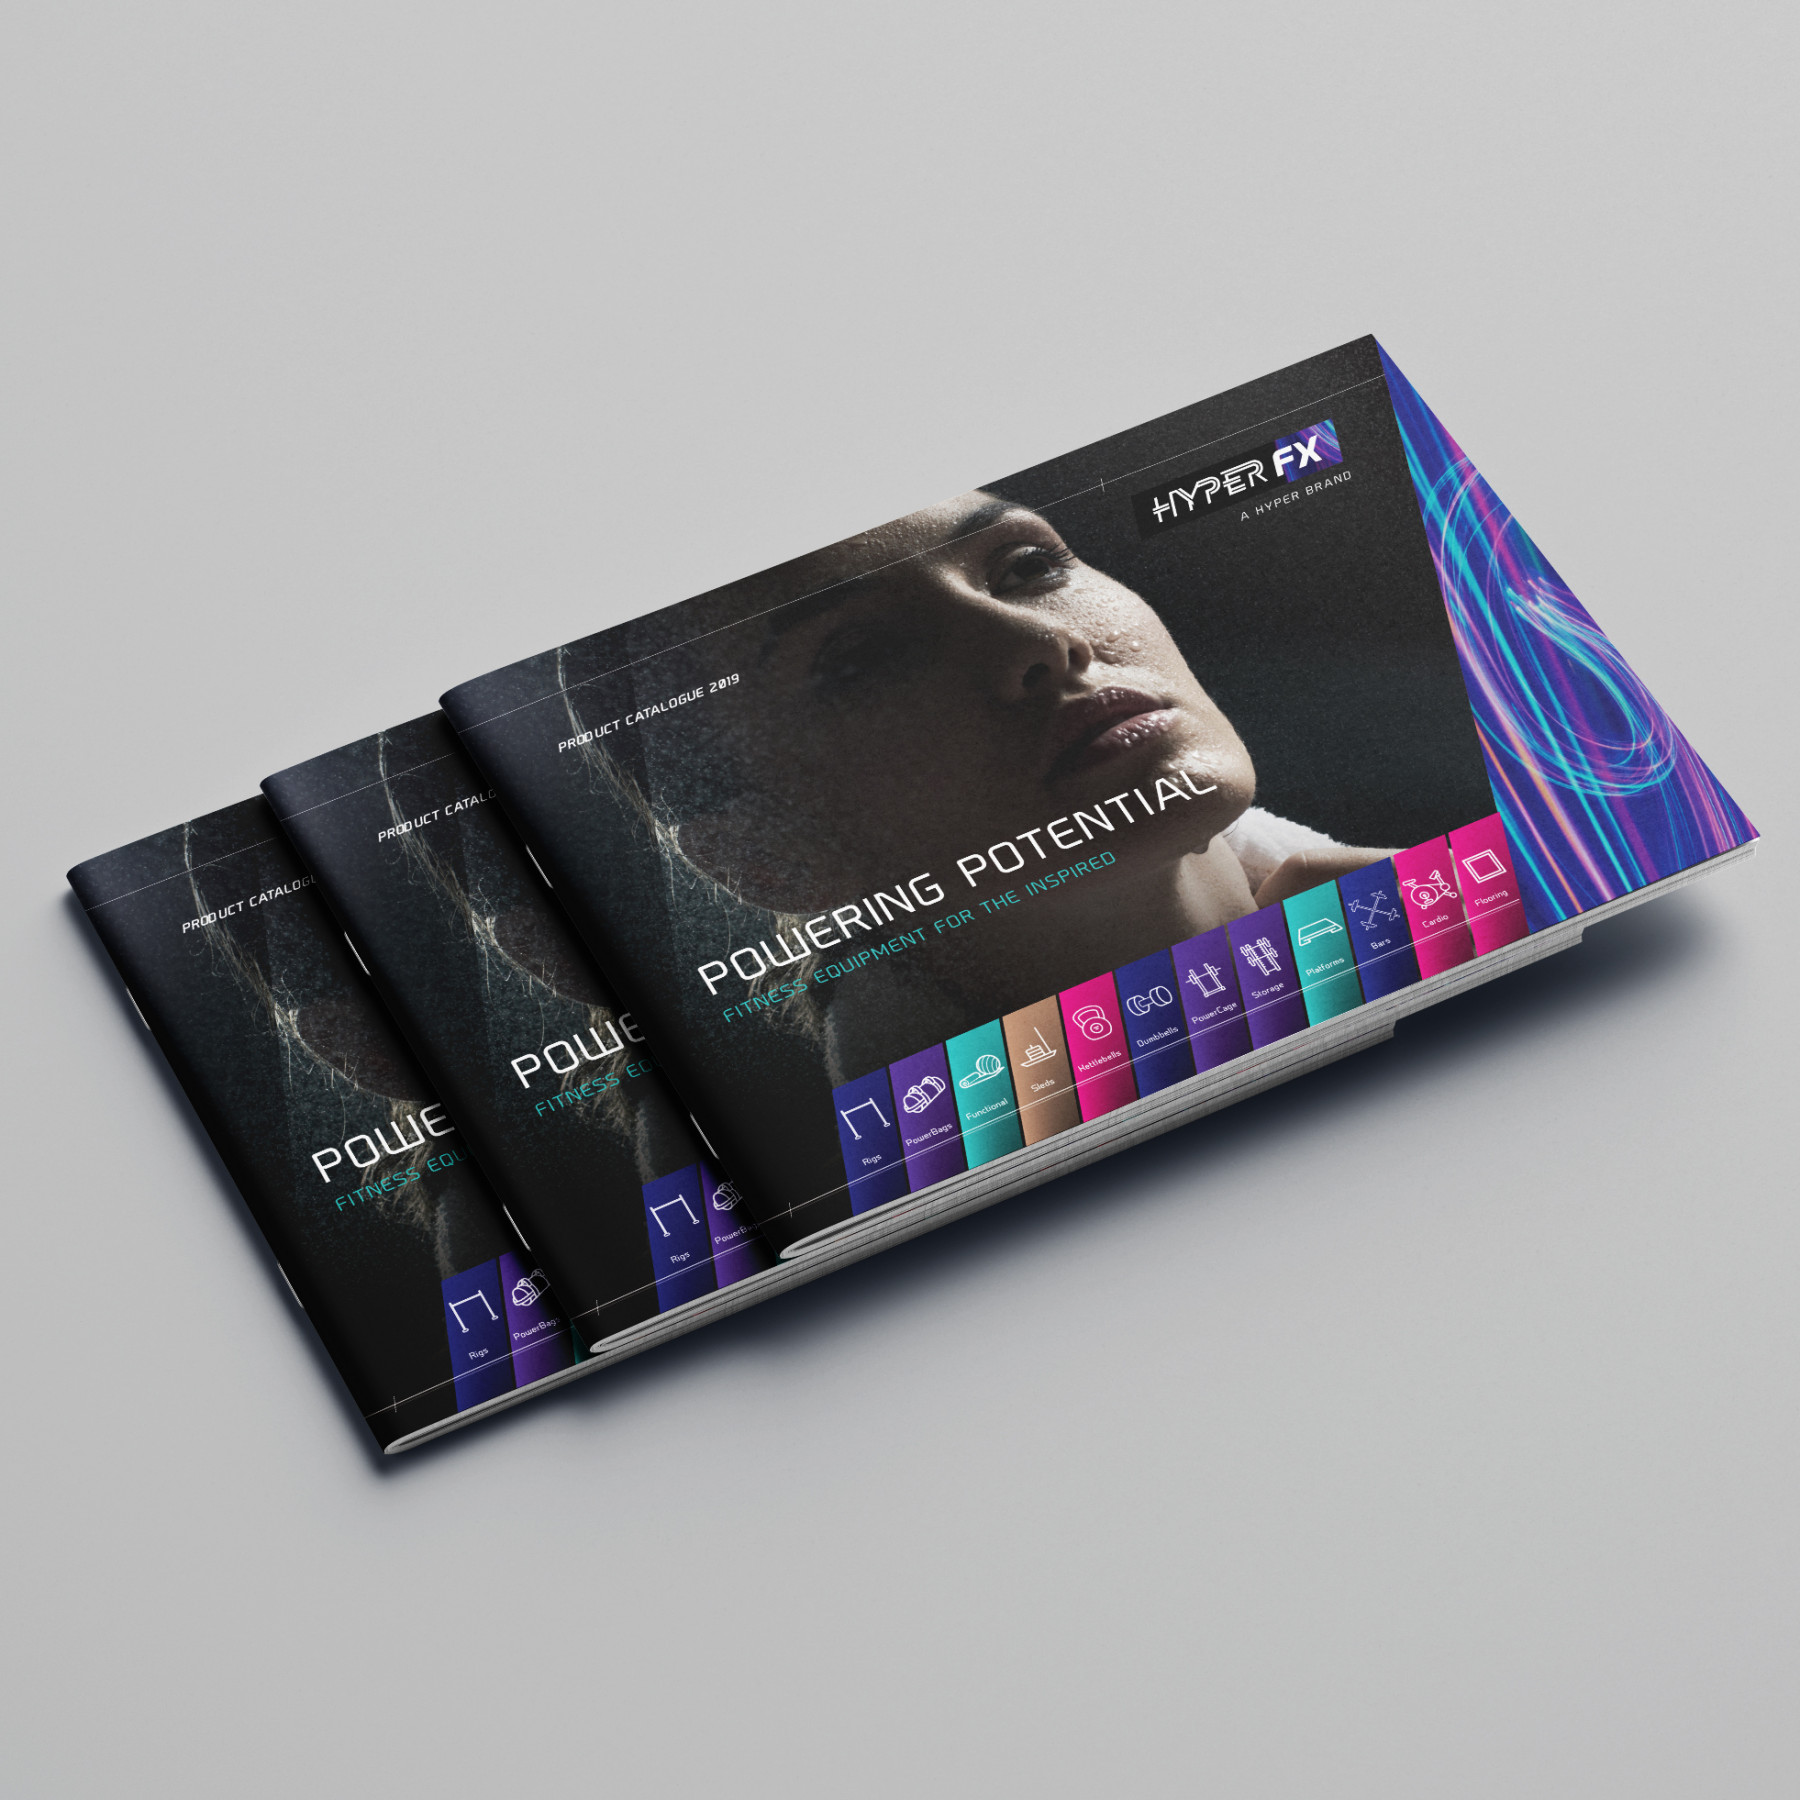 HyperFX Brochure Cover